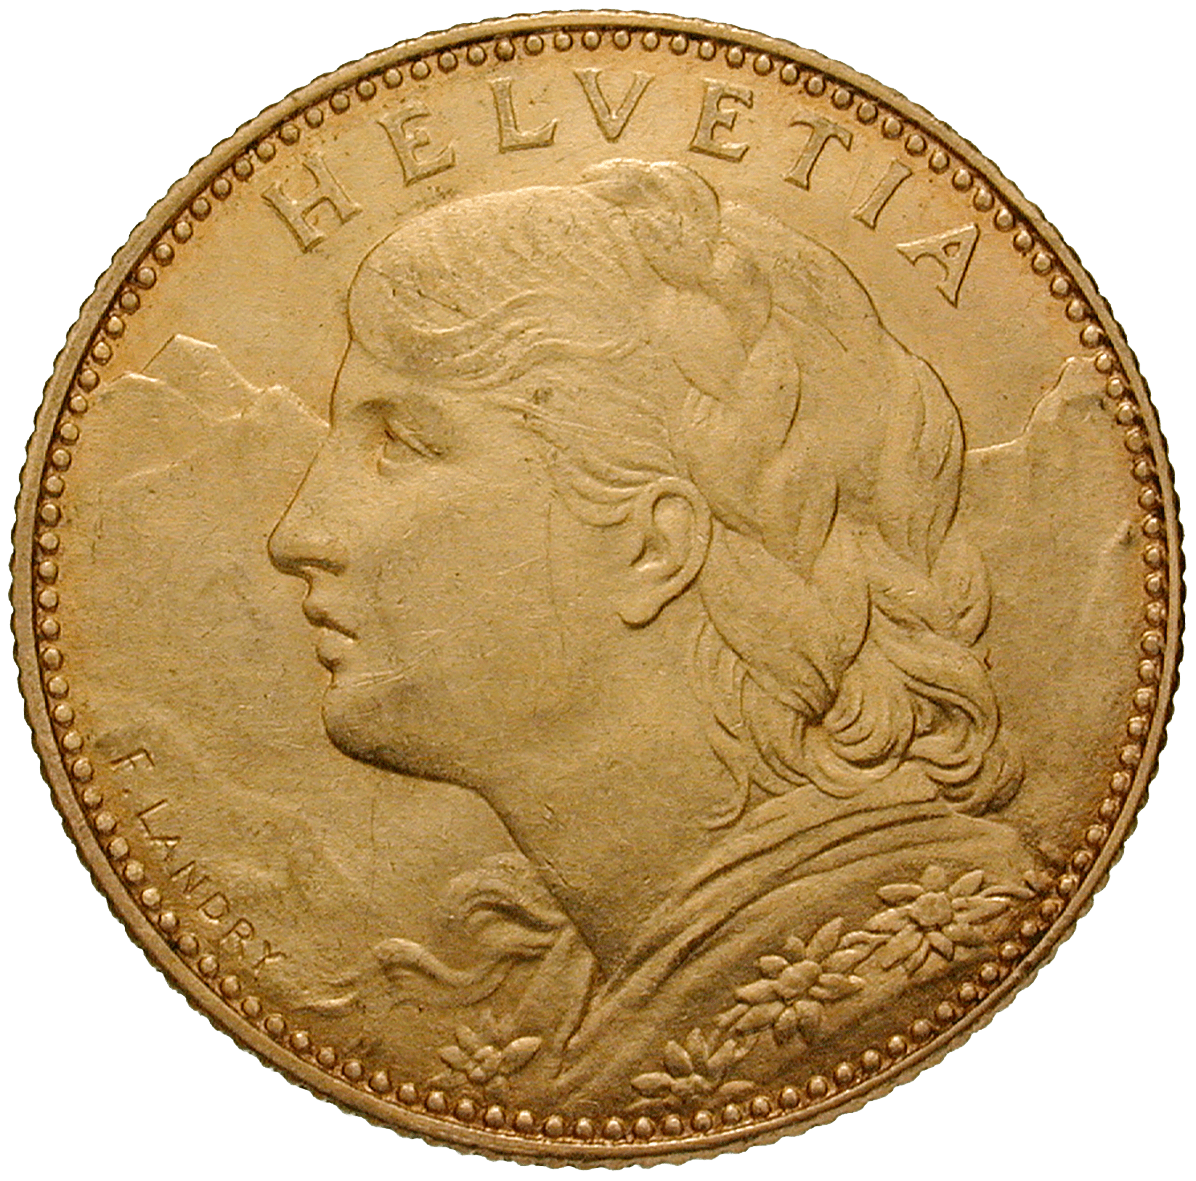 Schweizerische Eidgenossenschaft, 10 Franken (Vreneli) 1911 (obverse)